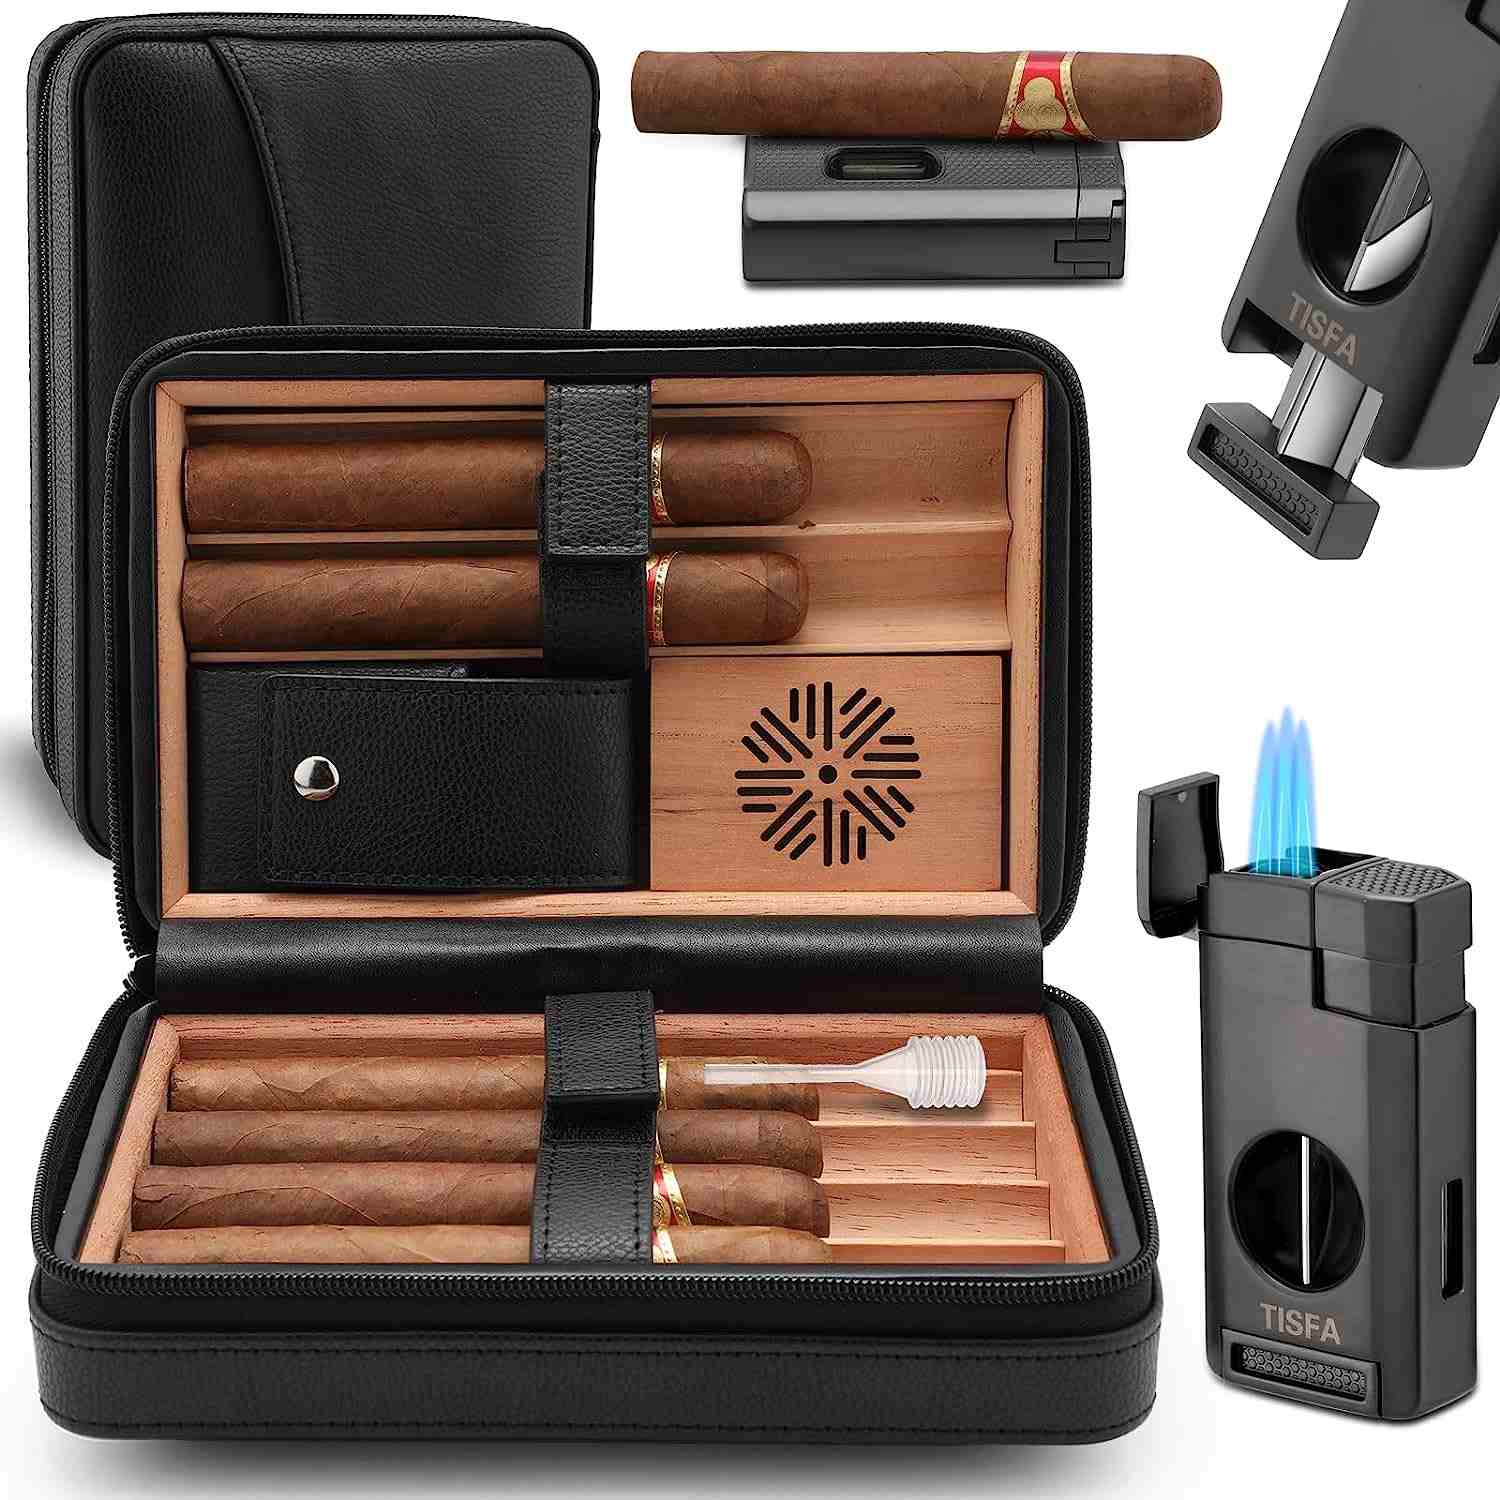 XIFEI Cigar Accessories (@xifeicigaraccessory) • Instagram photos and videos